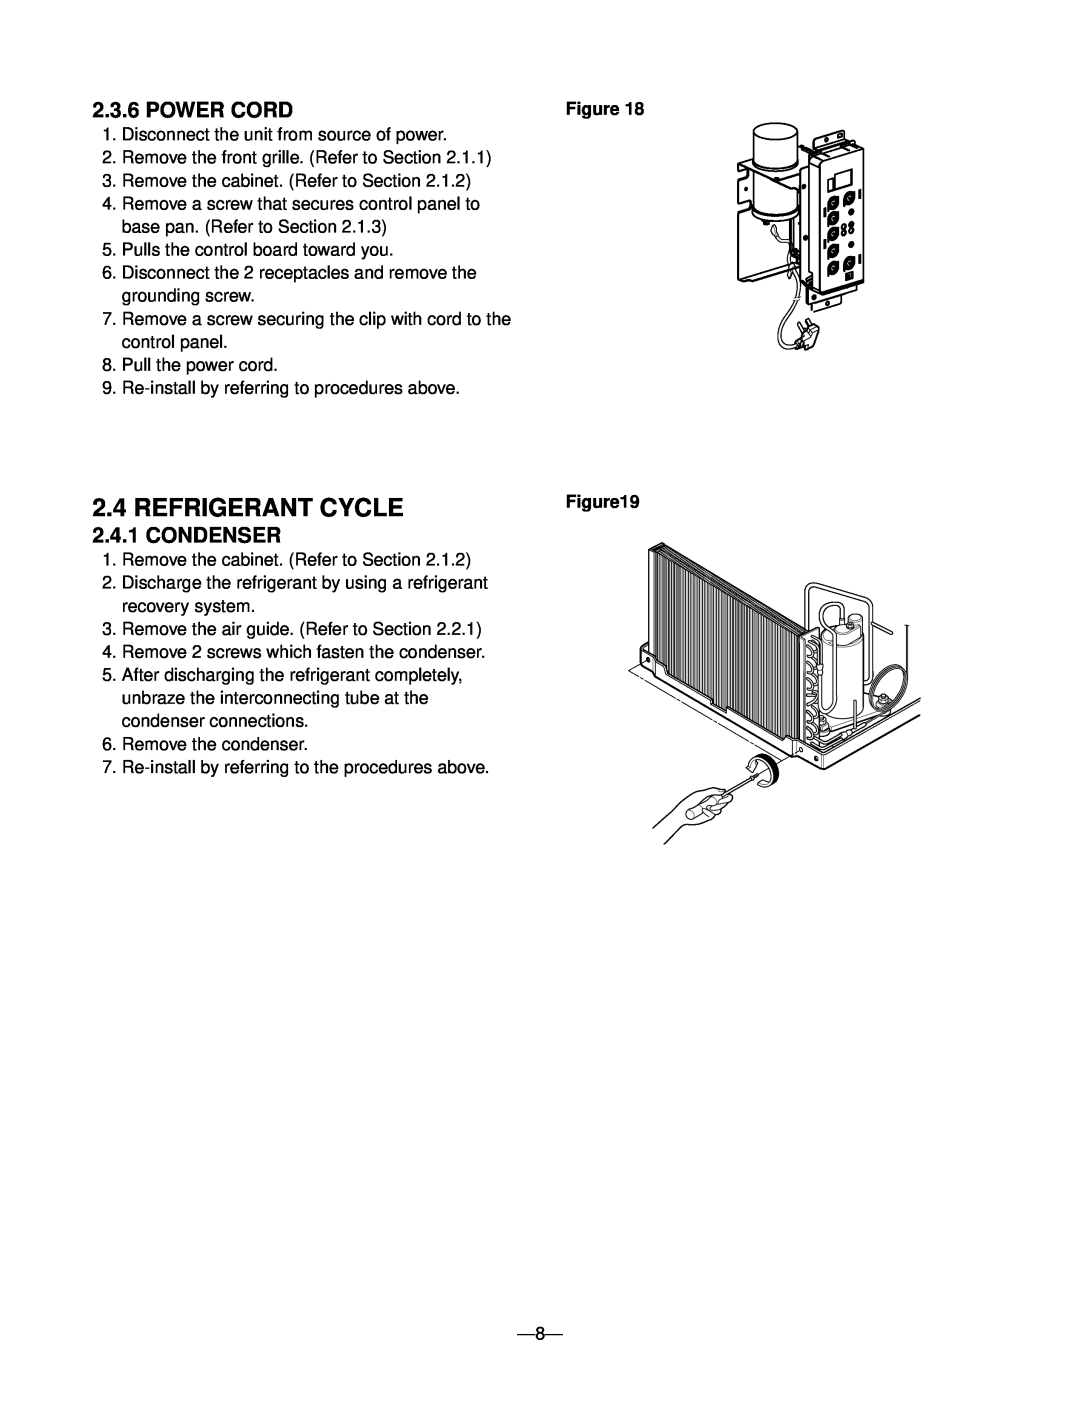 Friedrich CP05N10A manual Refrigerant Cycle, Power Cord, Condenser 